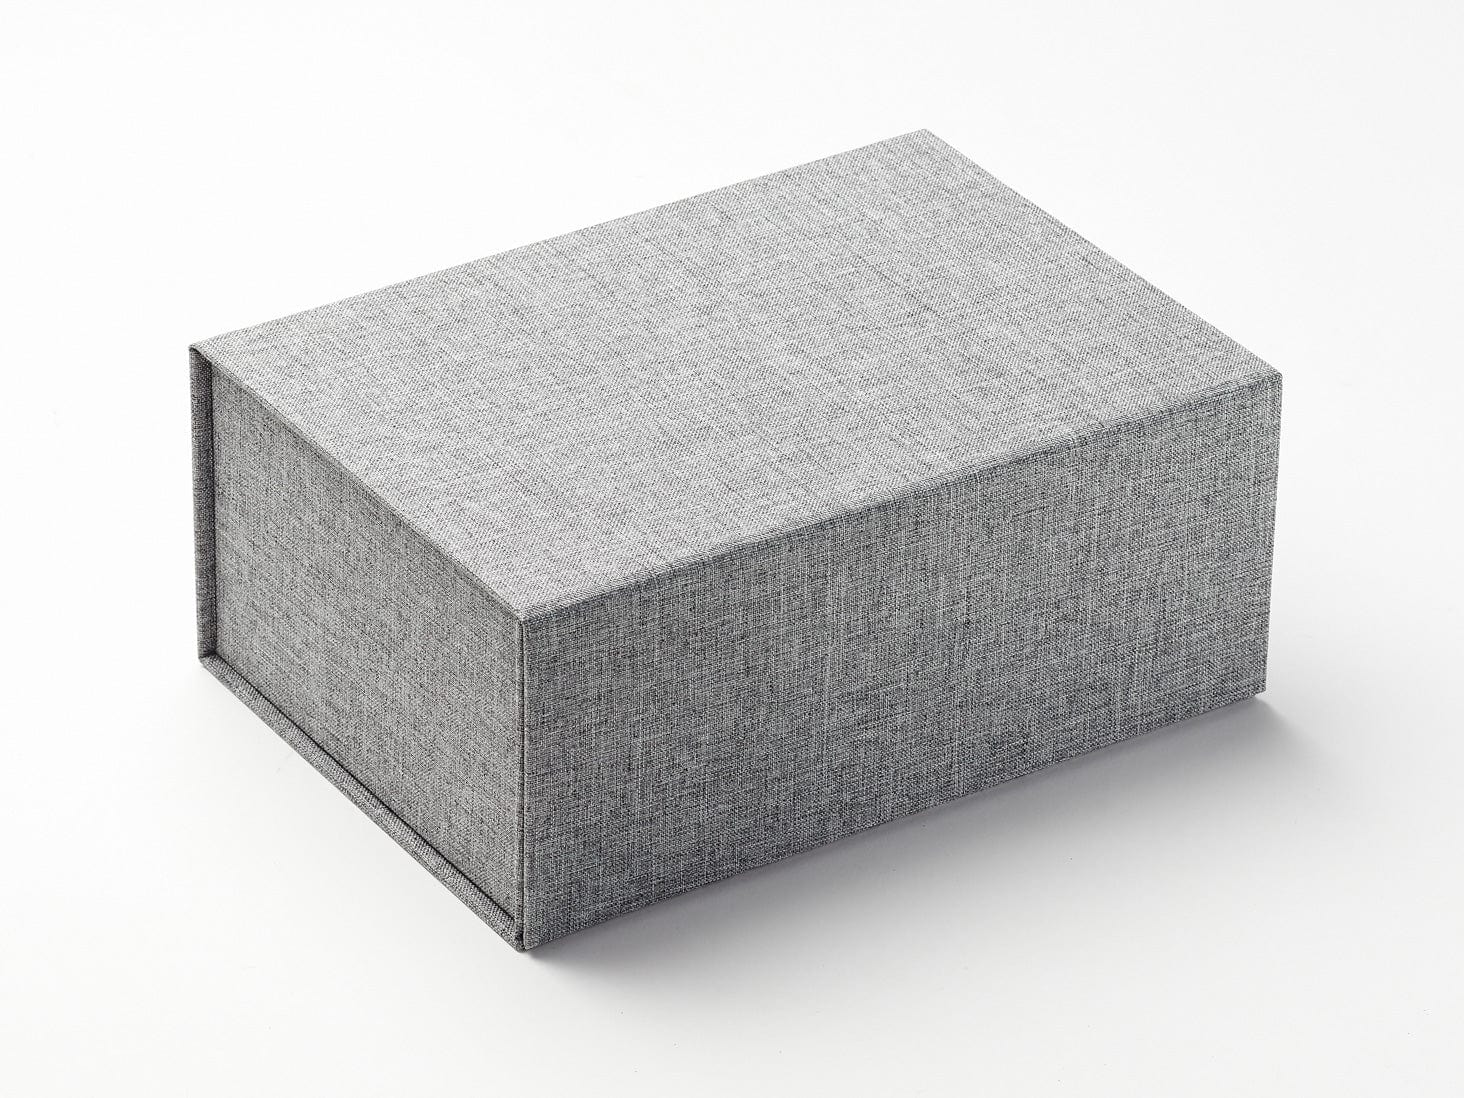 Sample Grey Linen No Magnets Gift Box